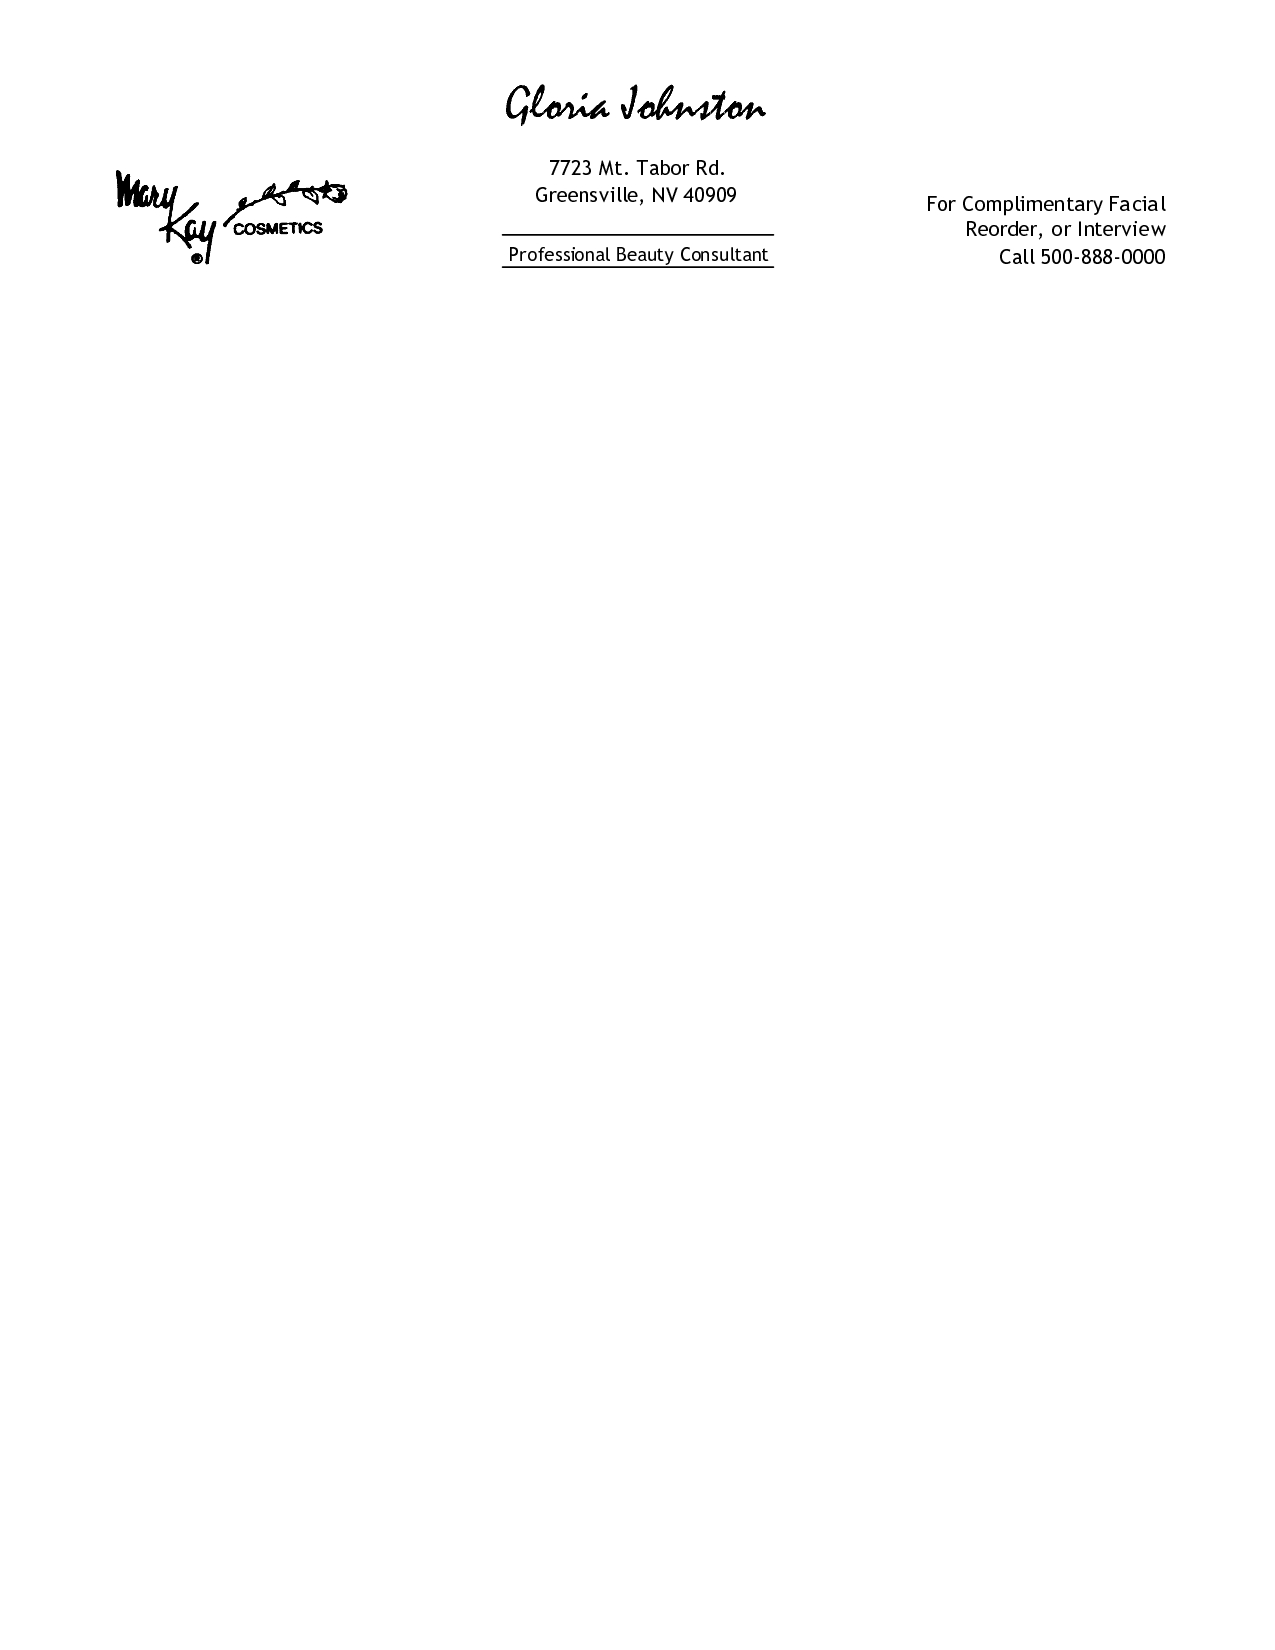 Free Printable Personal Letterhead Templates | Free Professional - Free Printable Letterhead Templates